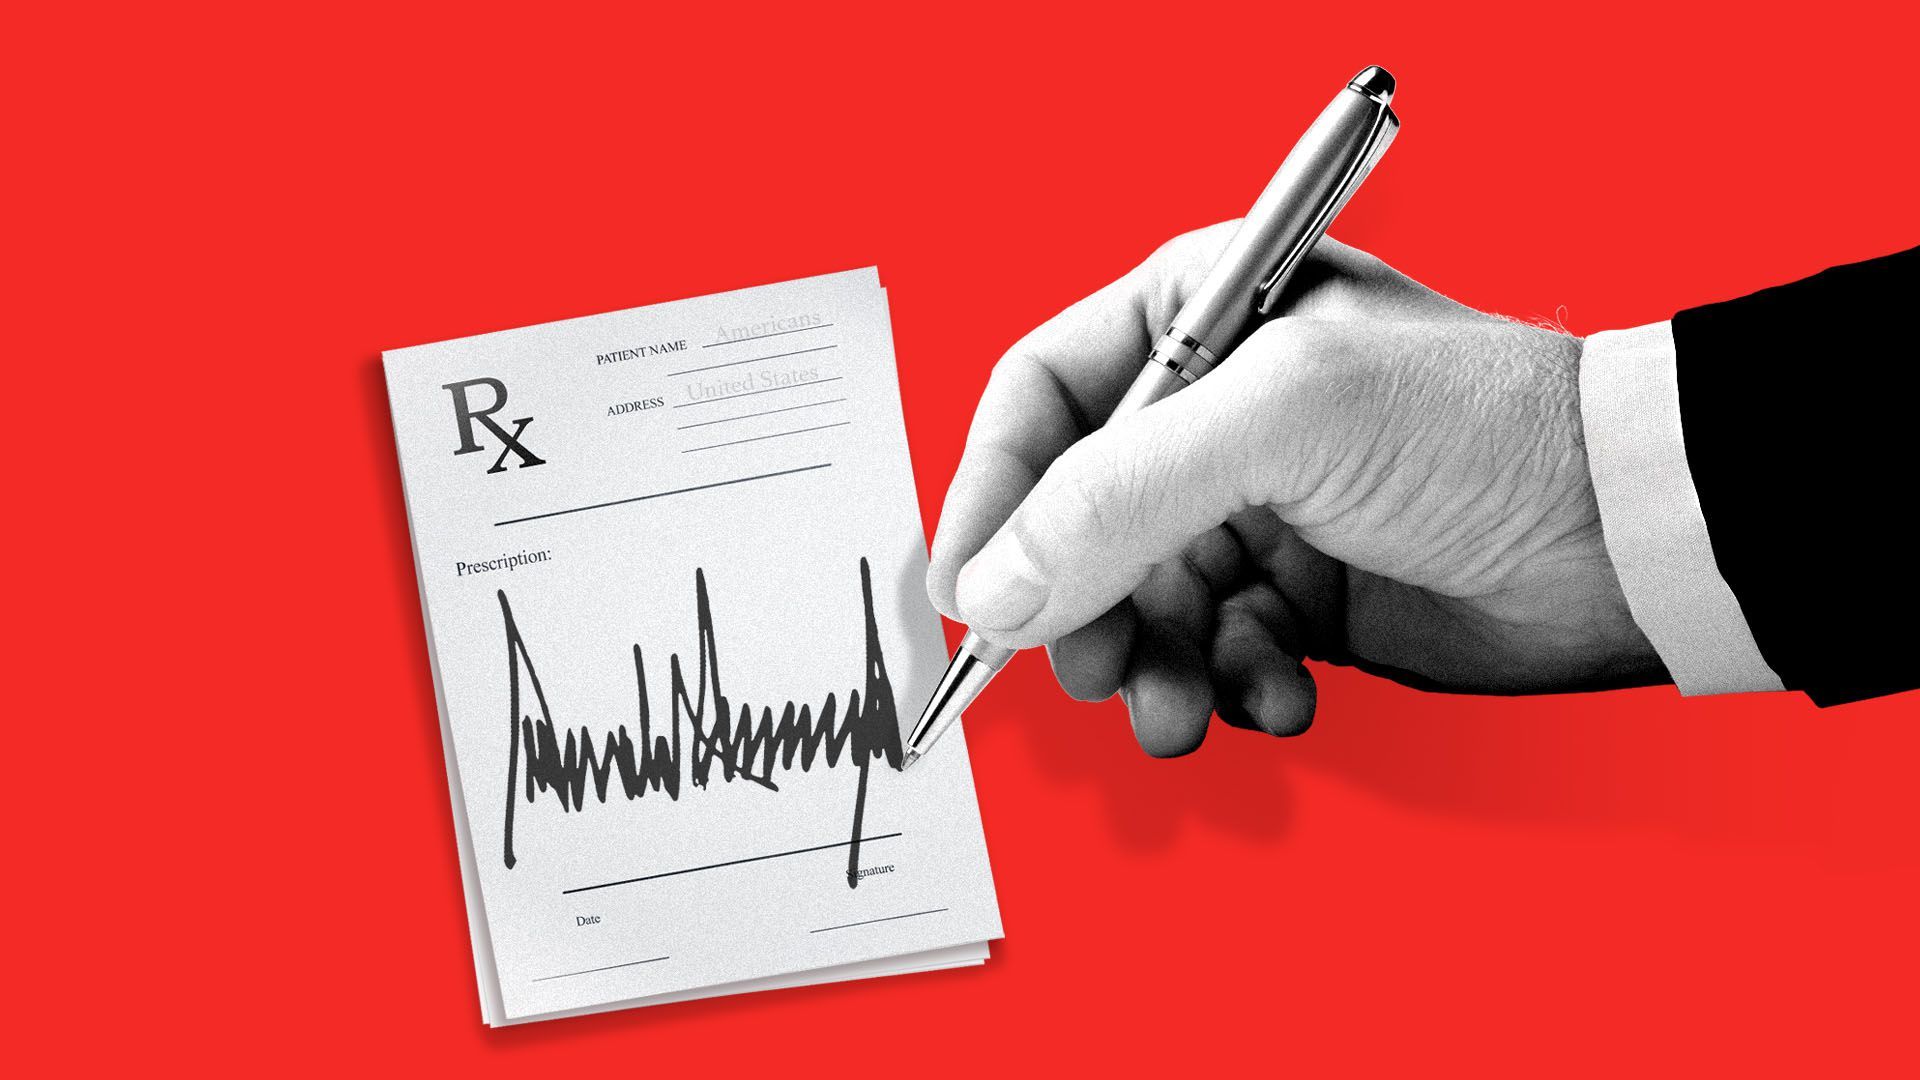 Illustration of Trump filling out prescription